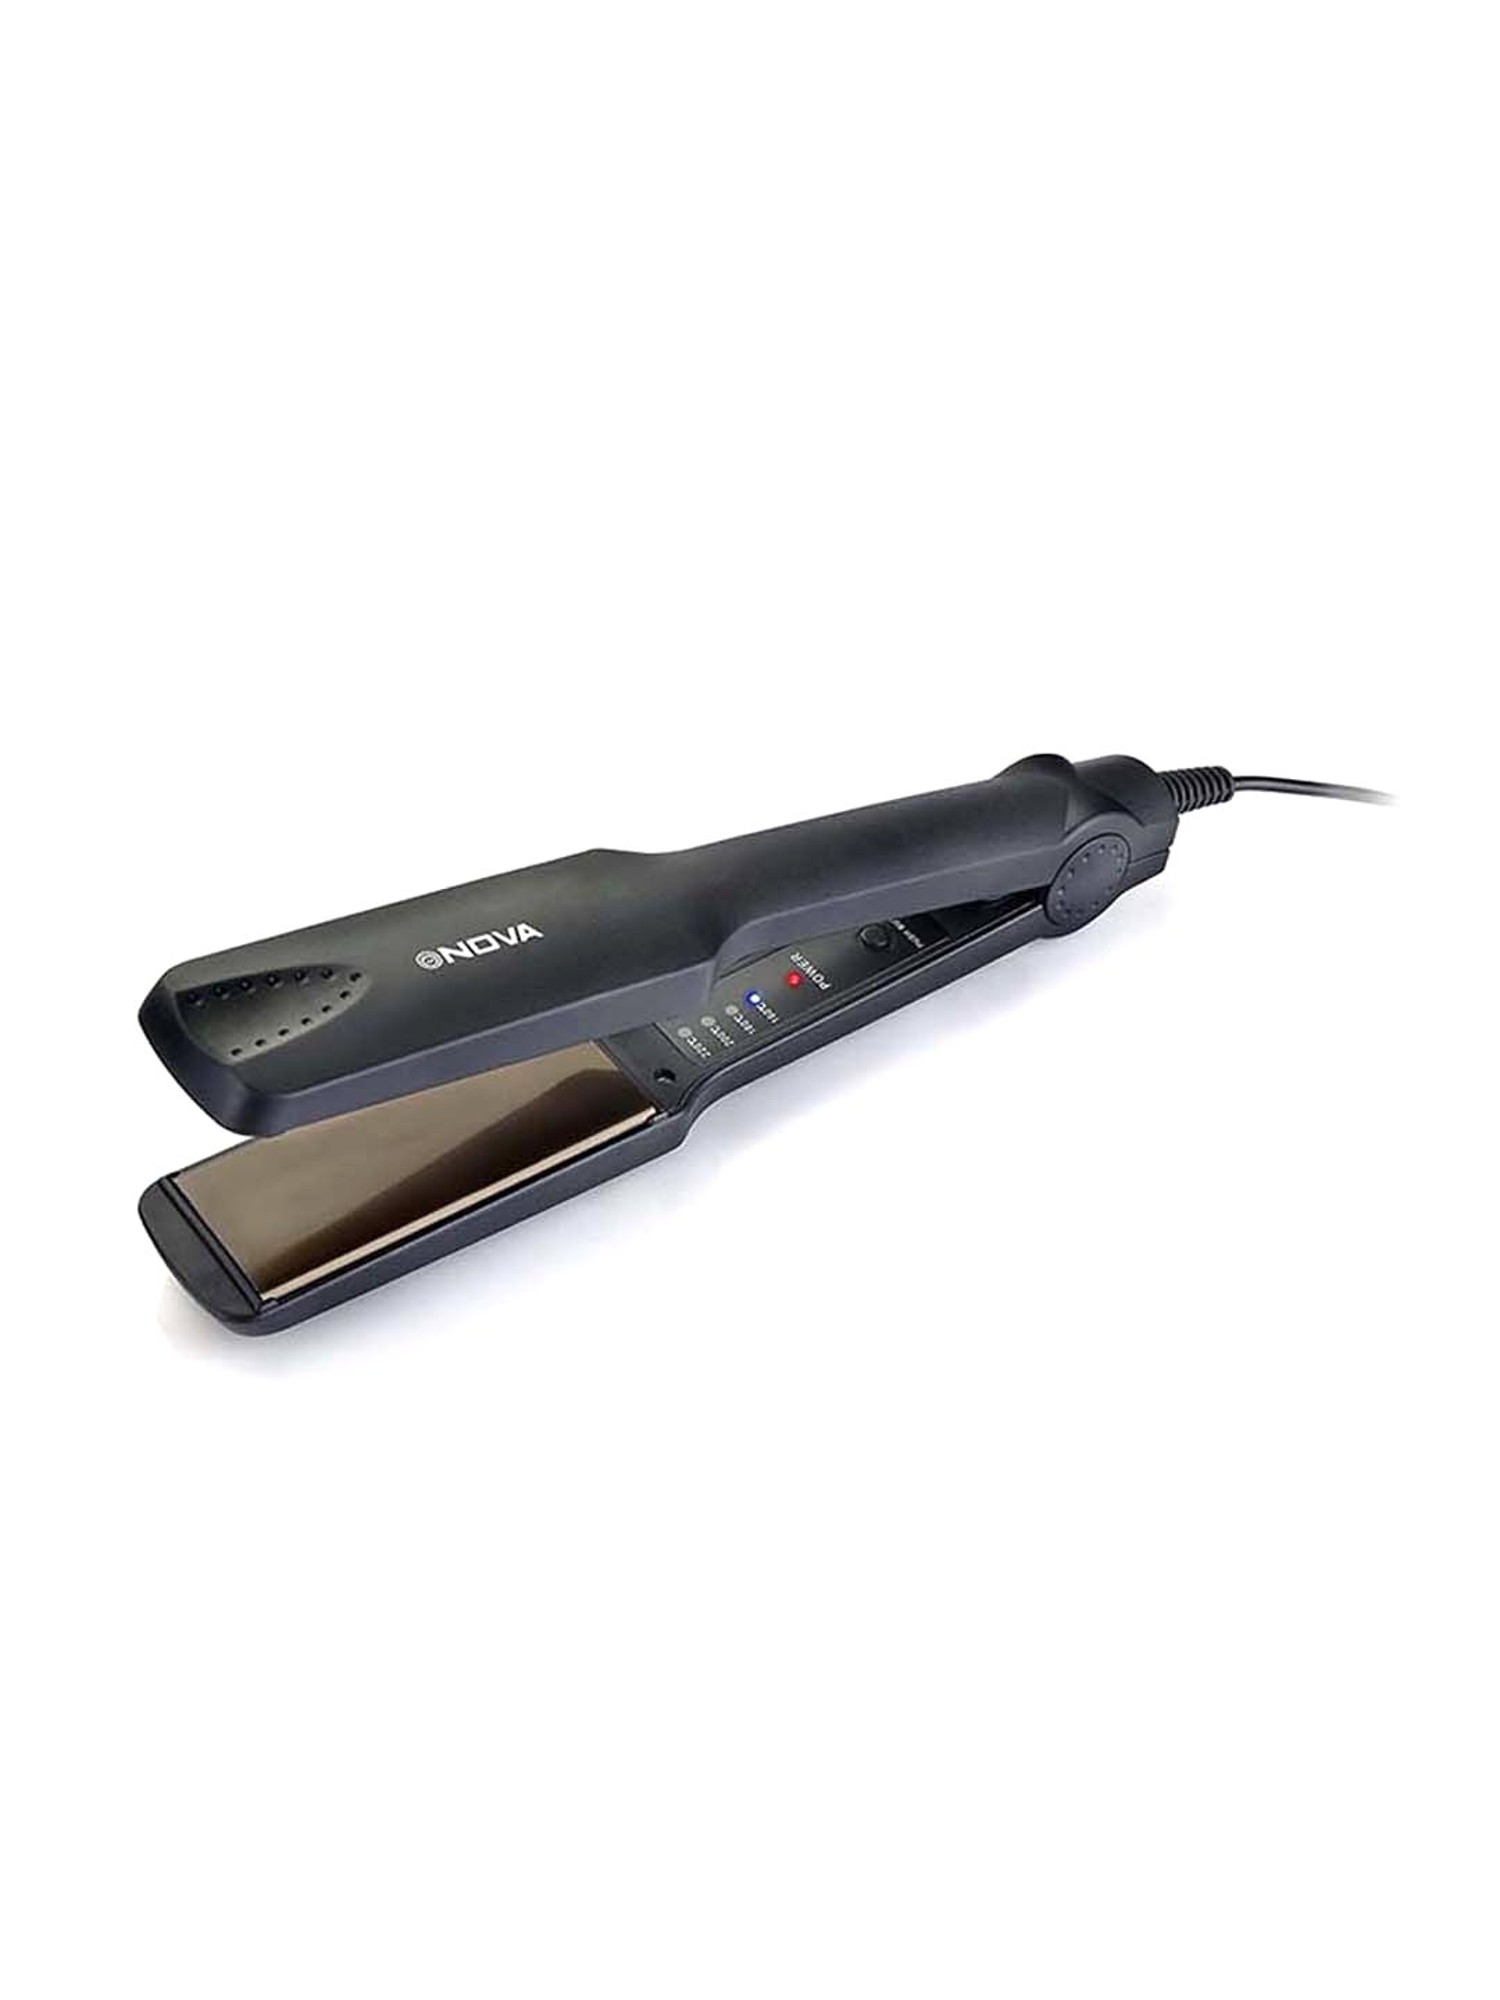 RALEX Hair Straightener Comb for Women  Men Hair Styler Straightener  Machine BrushPTC Heating Electric Straightener with 5 Temperature Control Hair  Straightener Price in India Full Specifications  Offers  DTashioncom